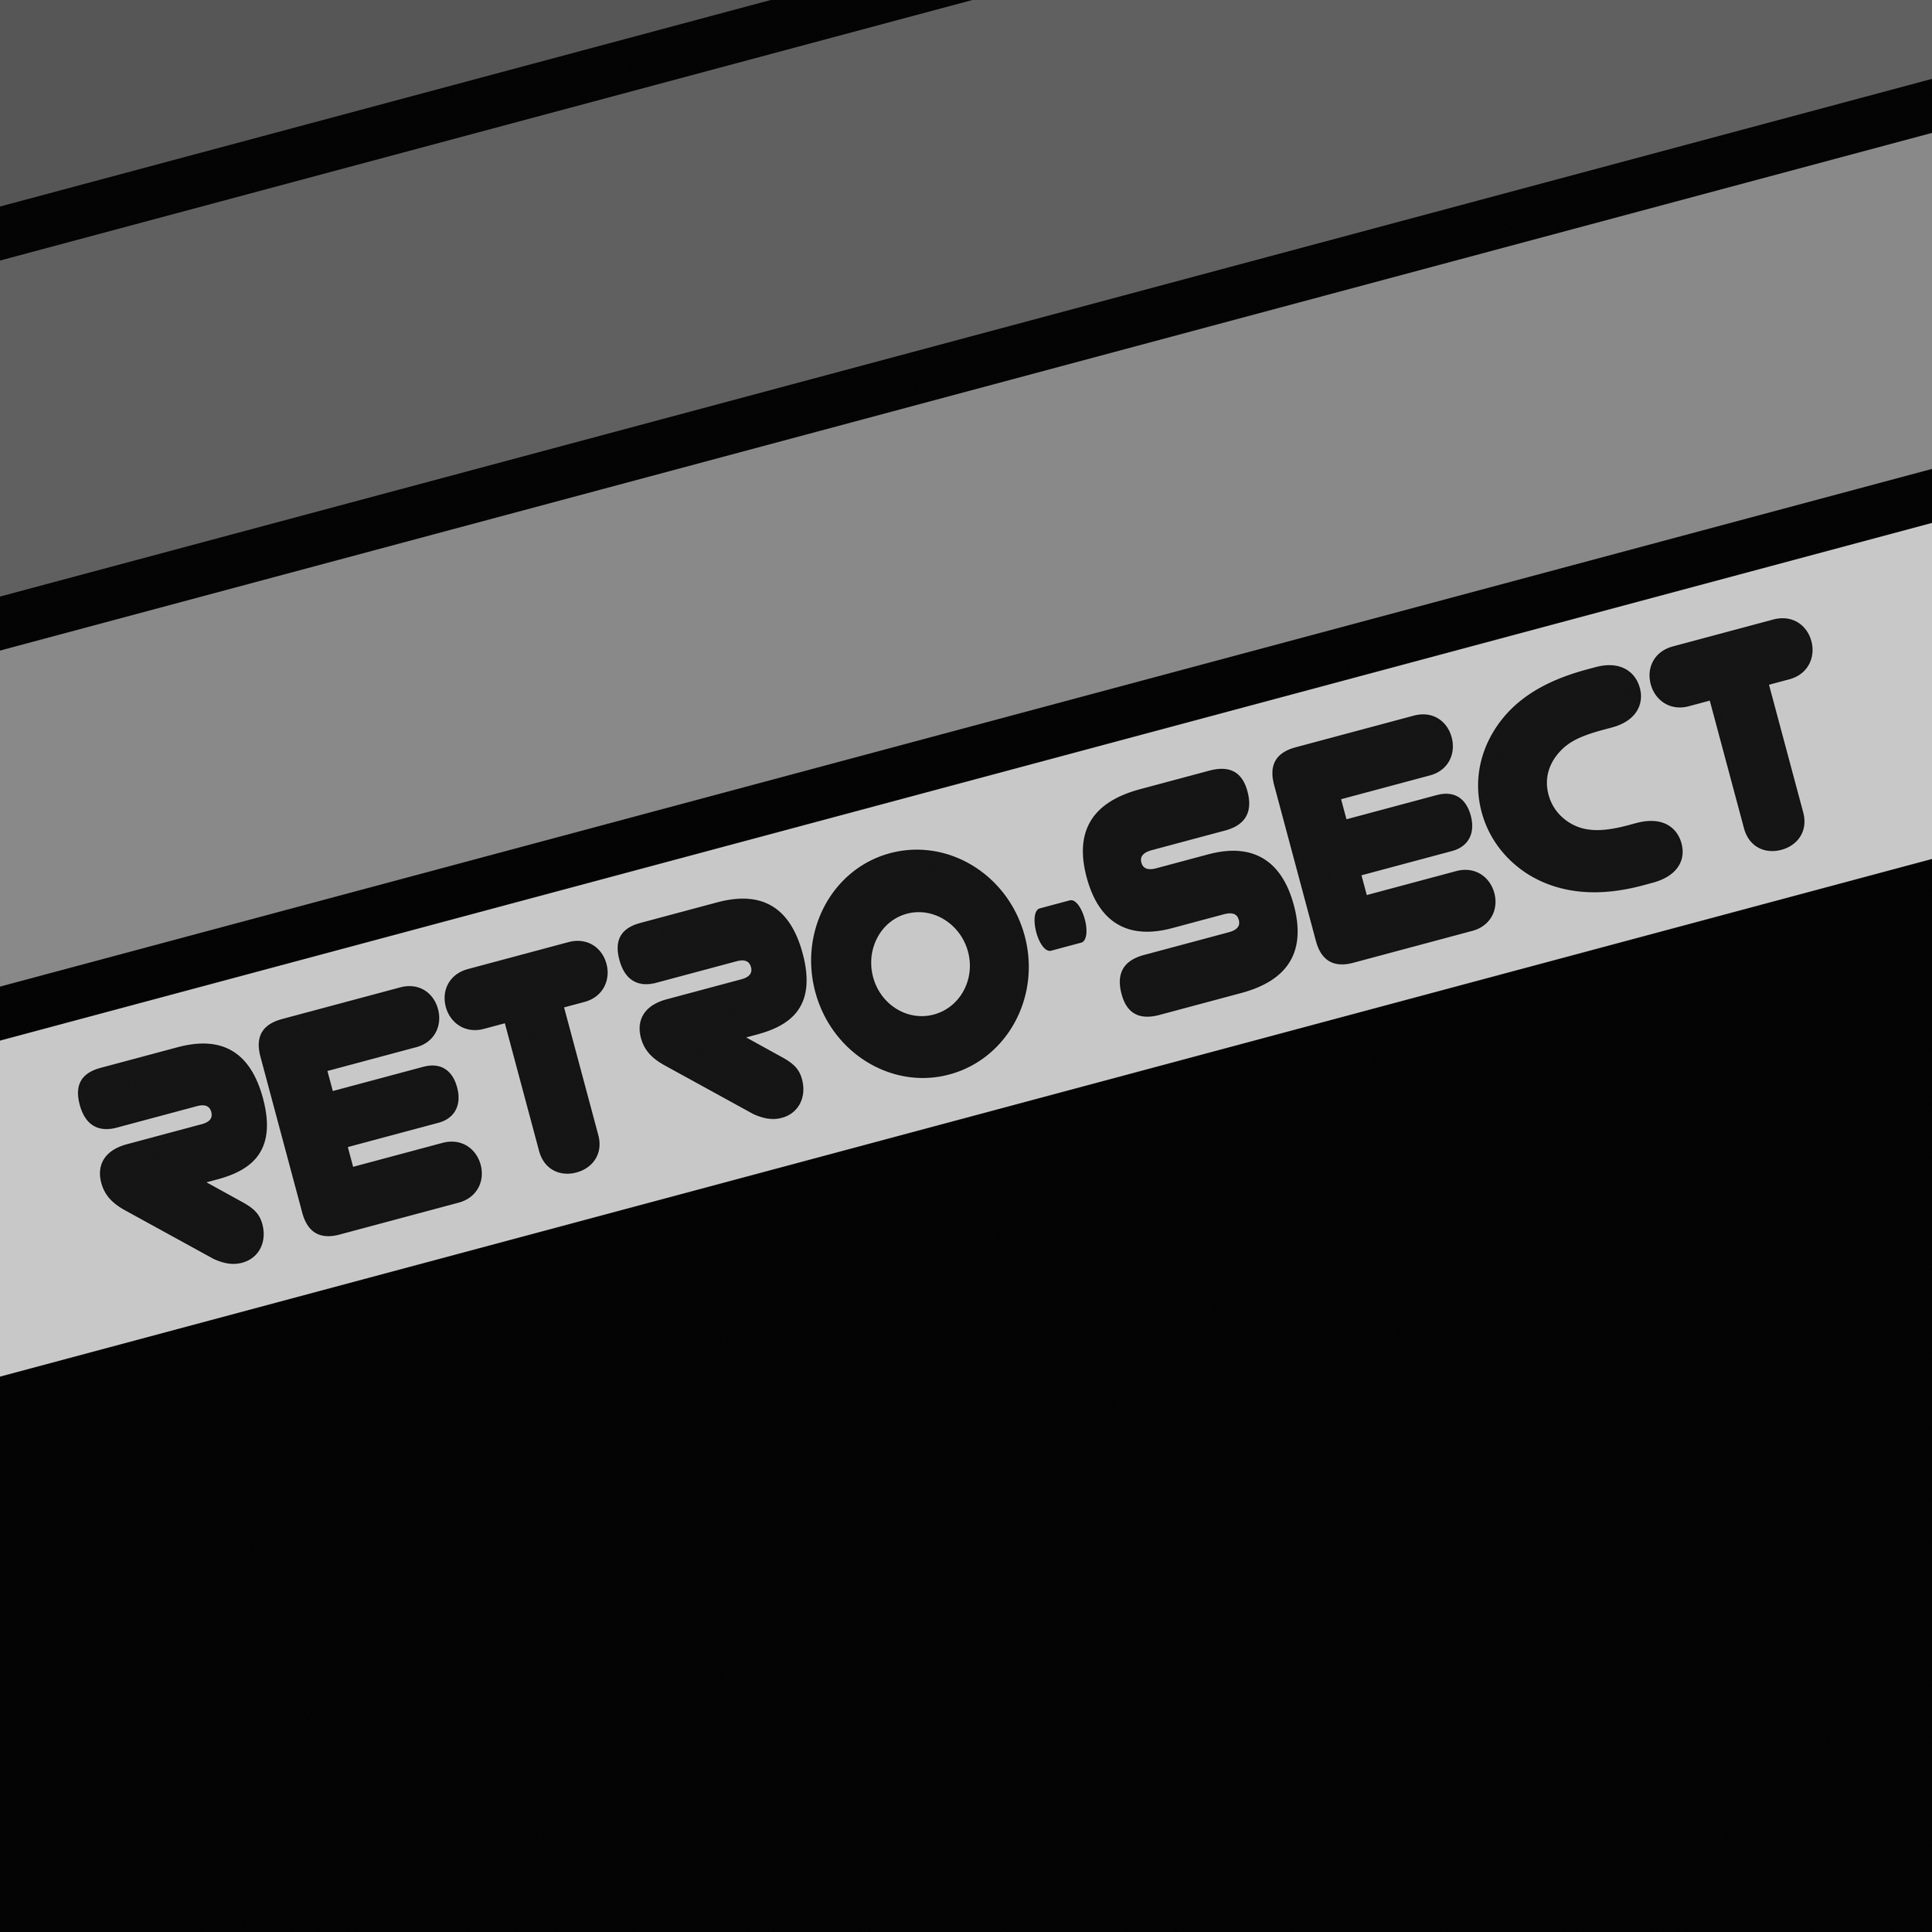 retro-sect-logo-square-2.png